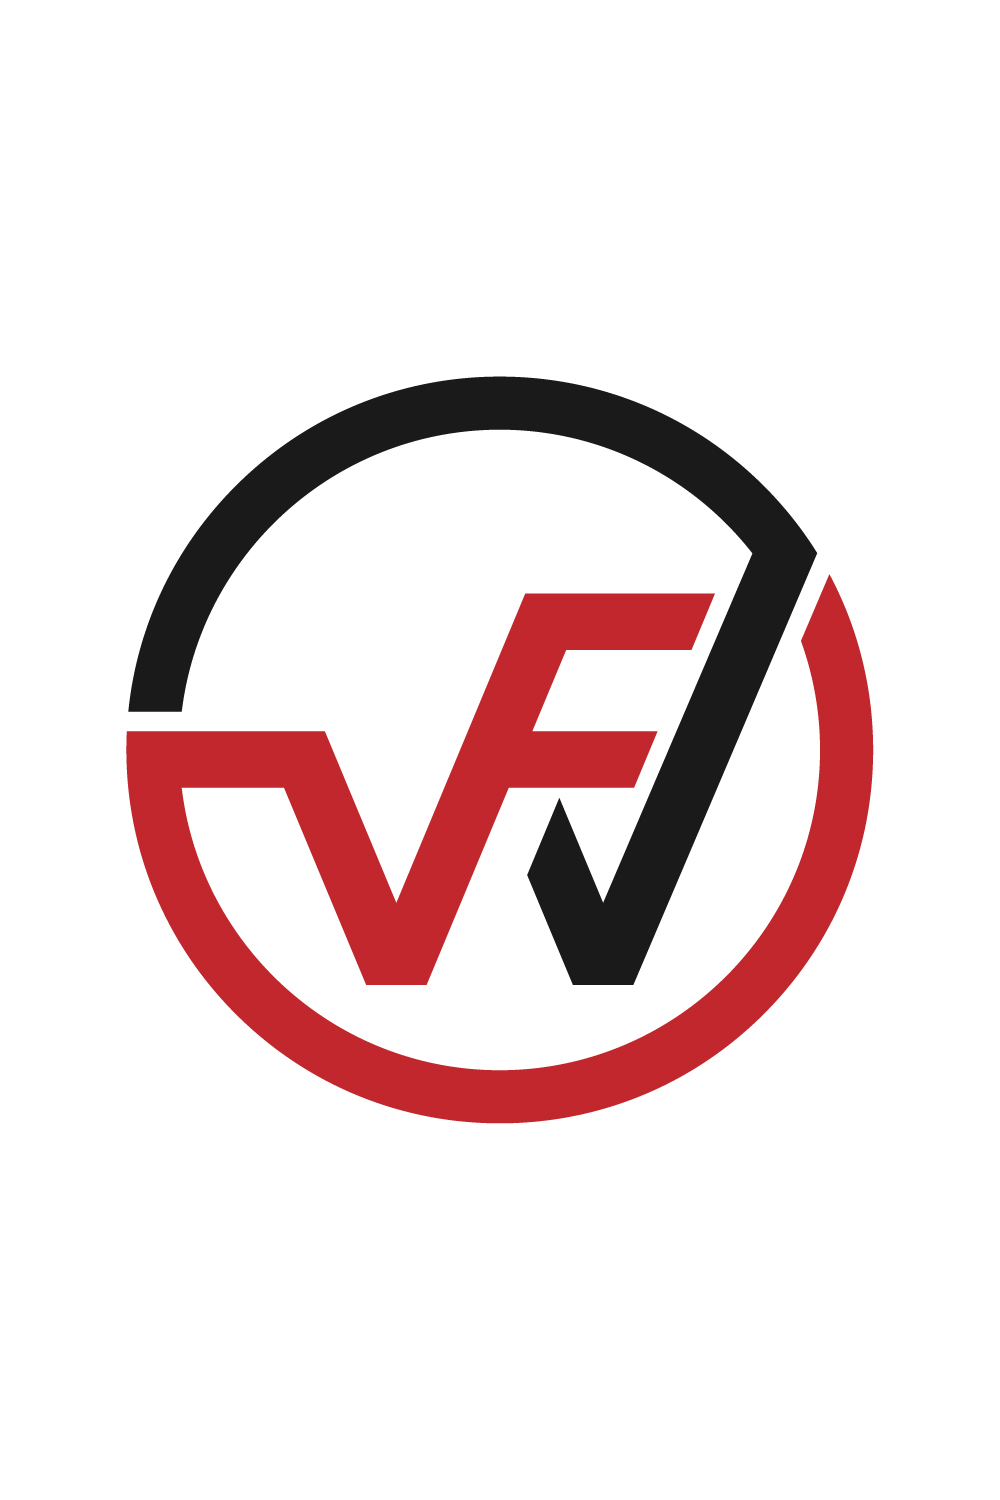 WVF logo design pinterest preview image.